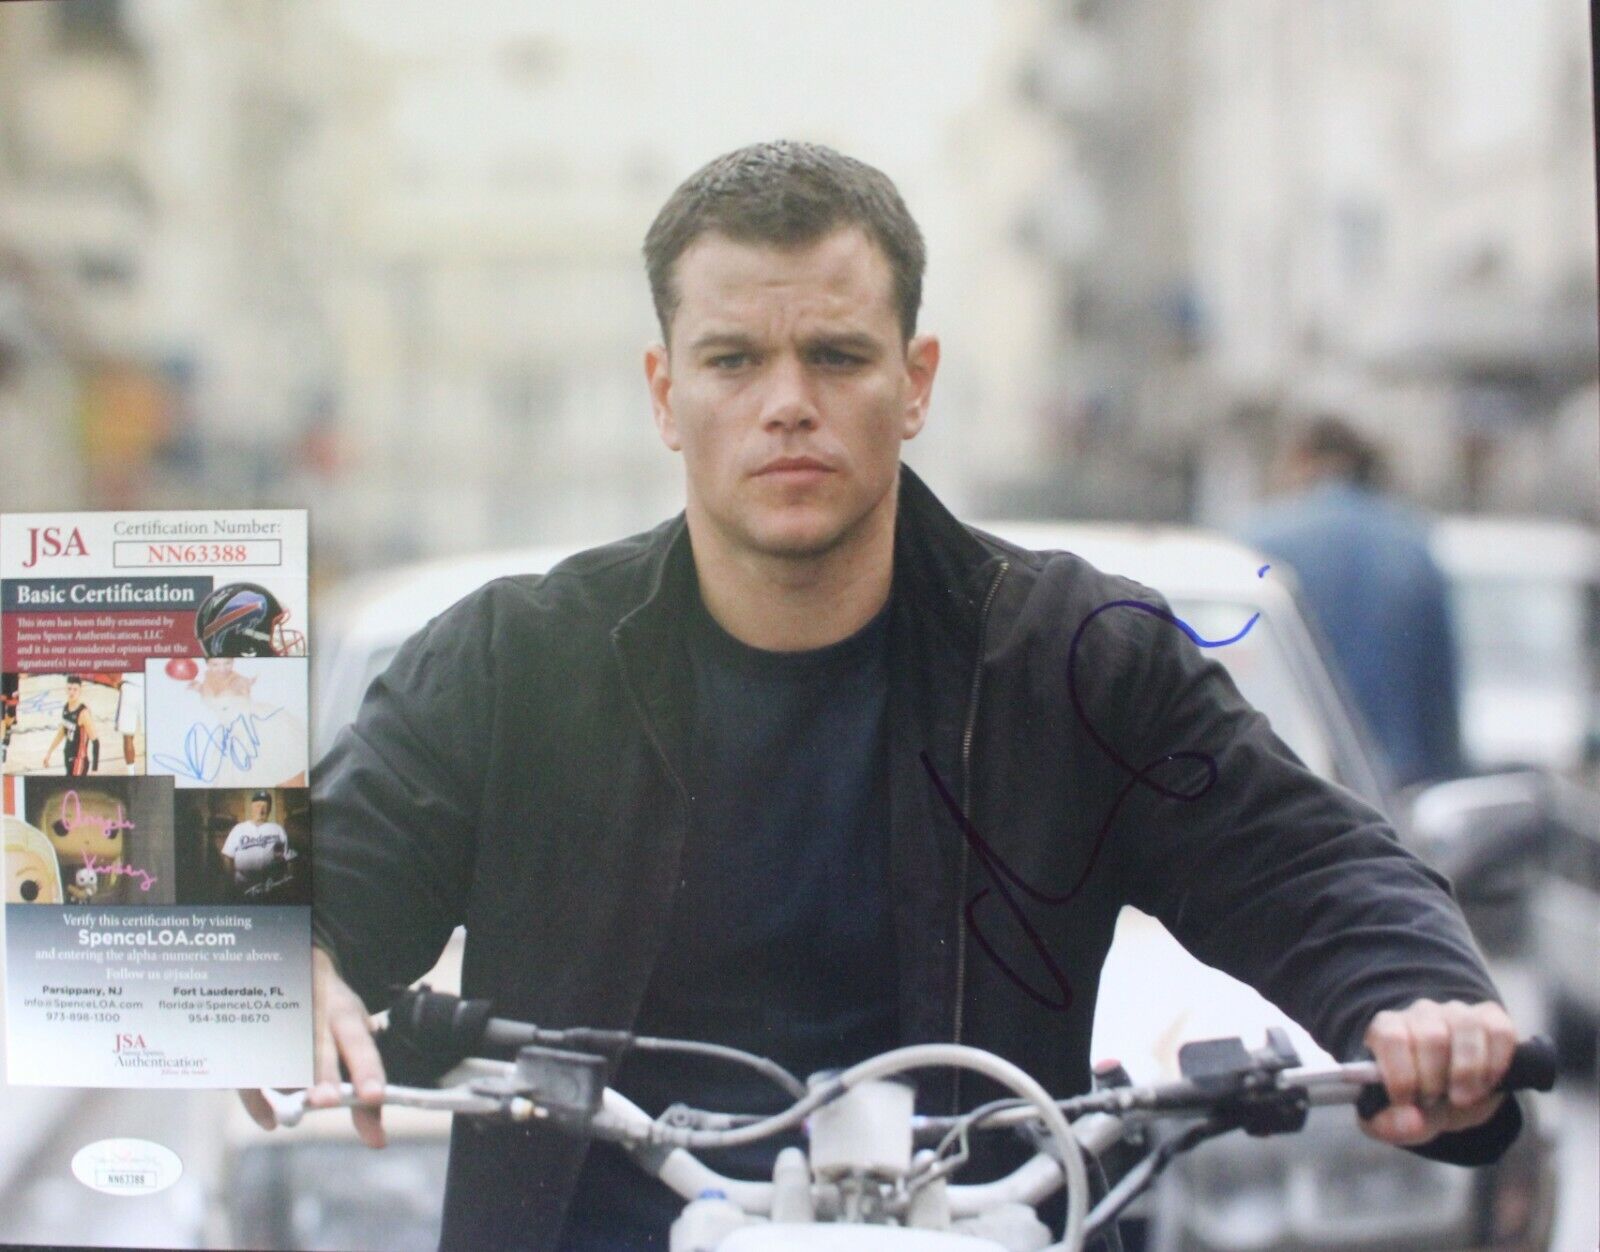 Matt Damon Signed Jason Bourne Identity 11x14 Photo Poster painting w/JSA COA NN63388 Supremacy